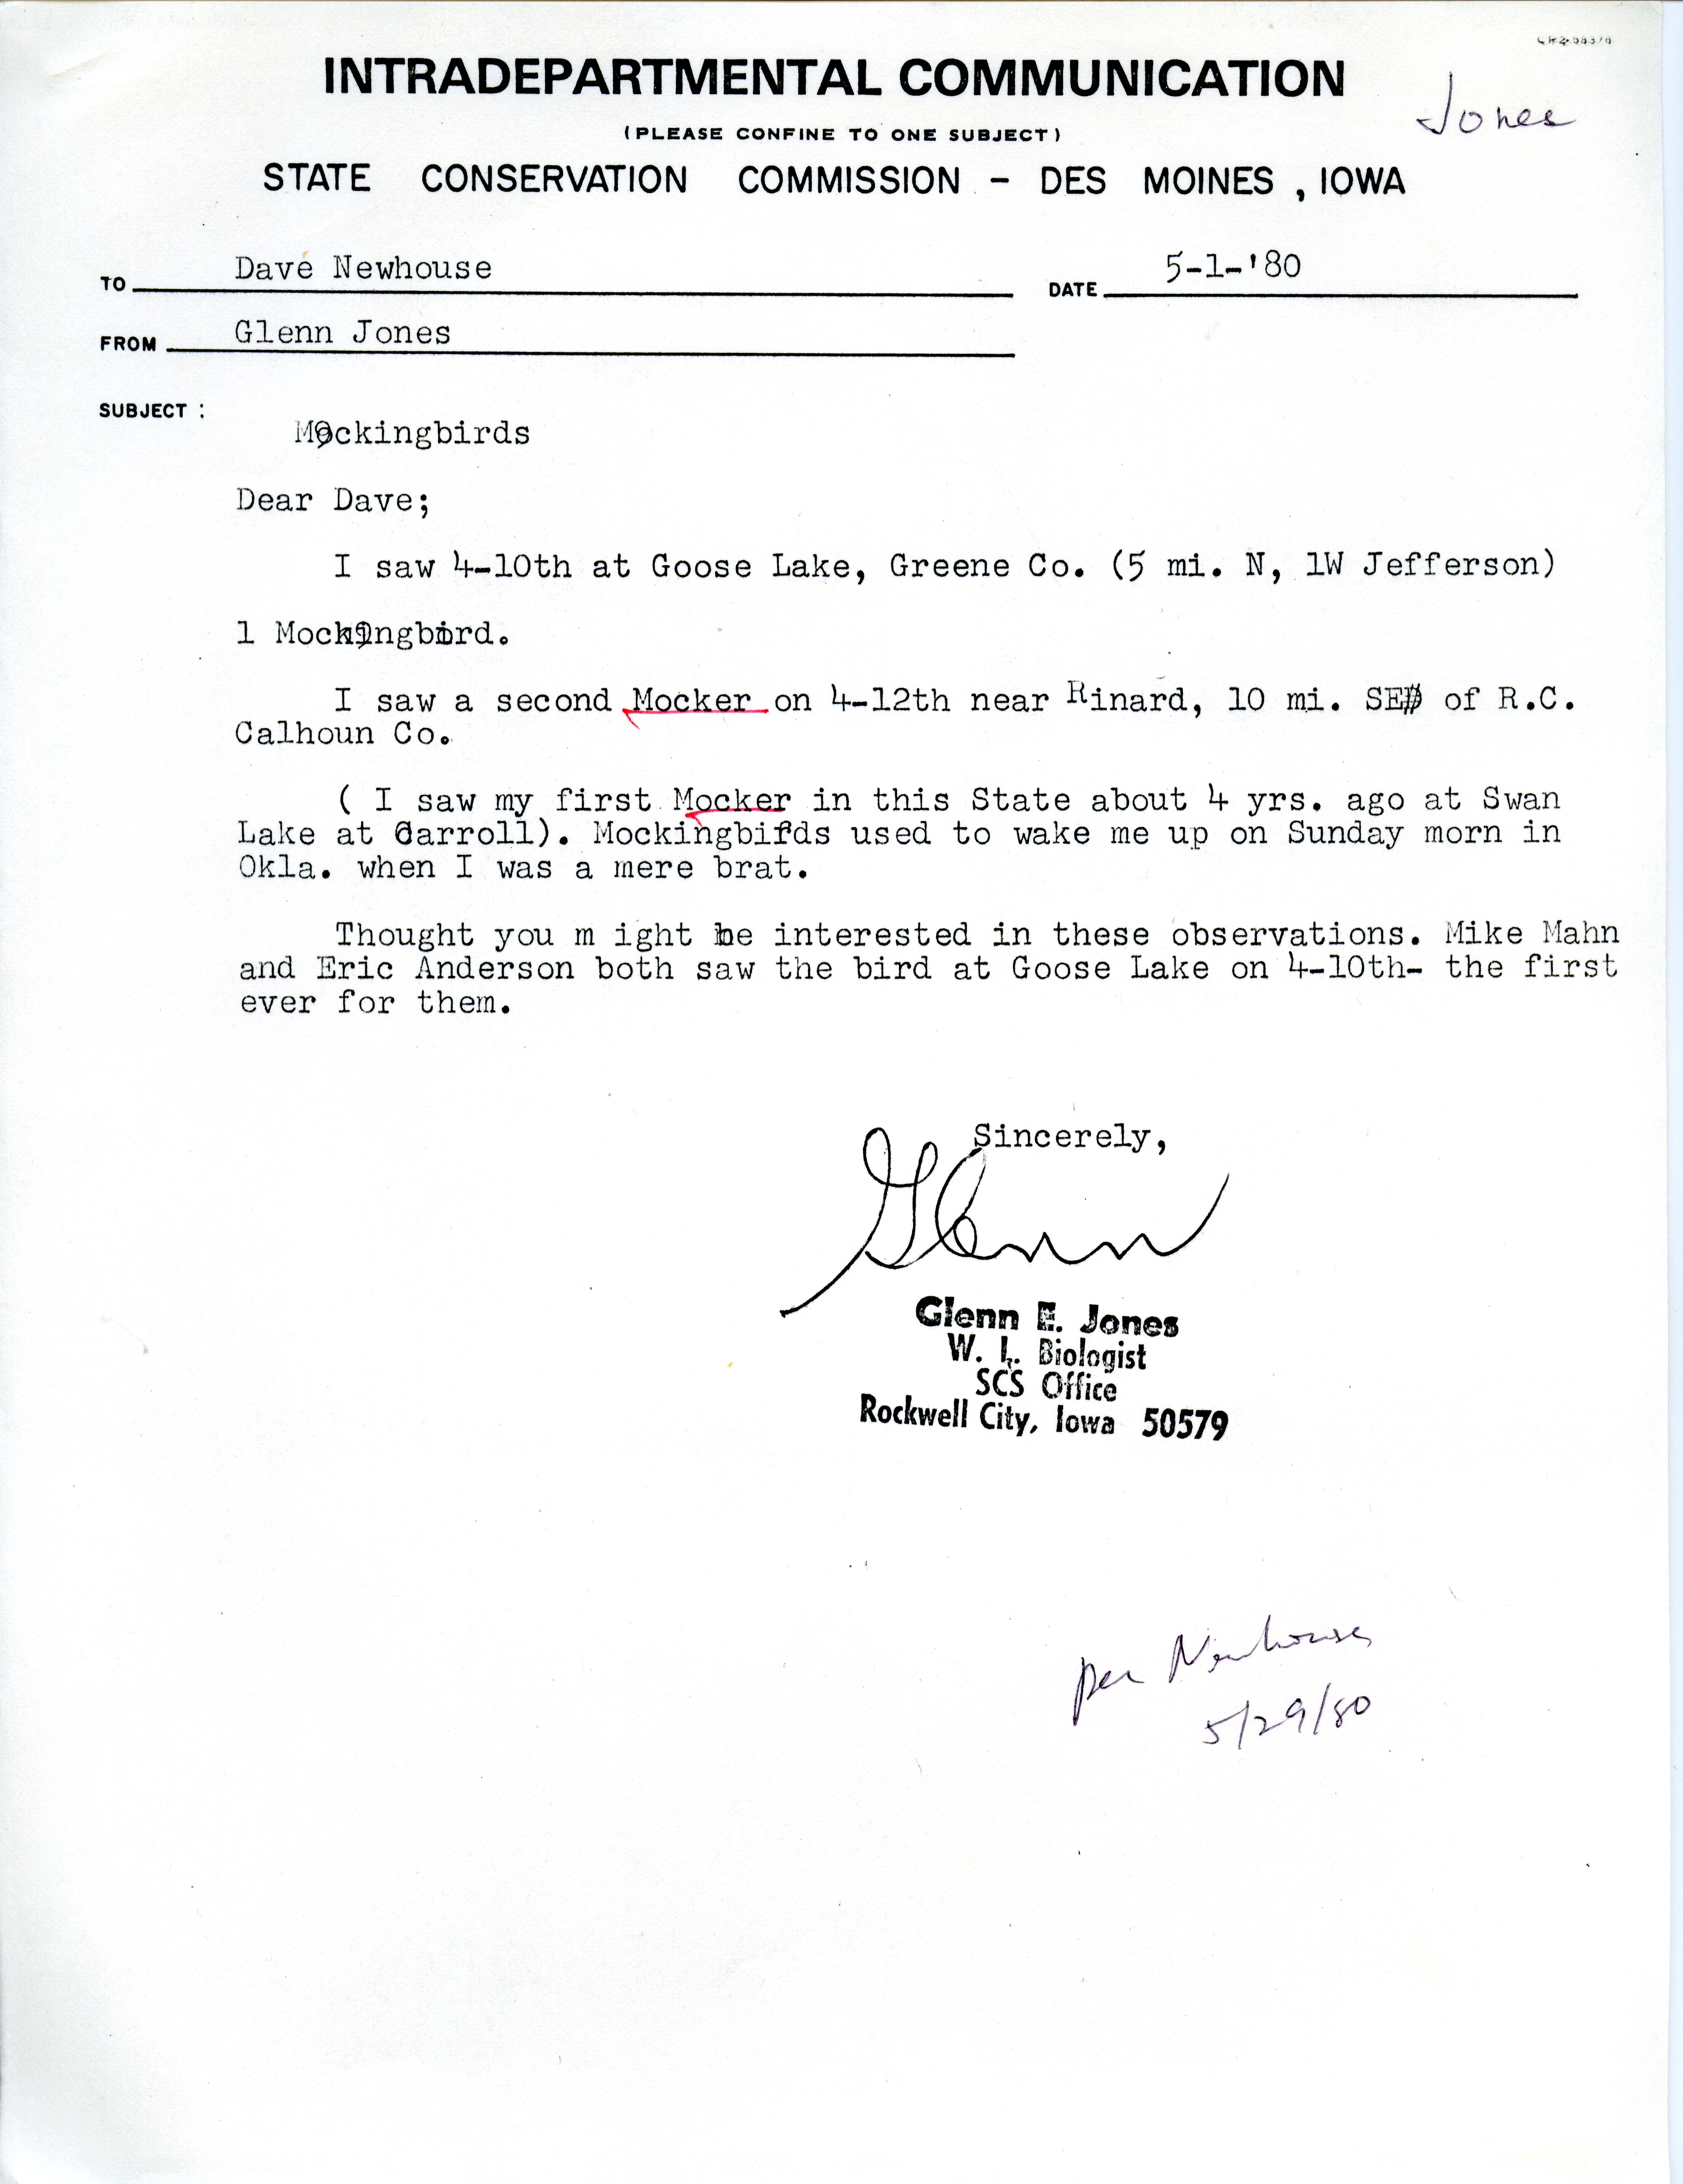 Glenn E. Jones letter to David A. Newhouse regarding bird sightings, May 1, 1980